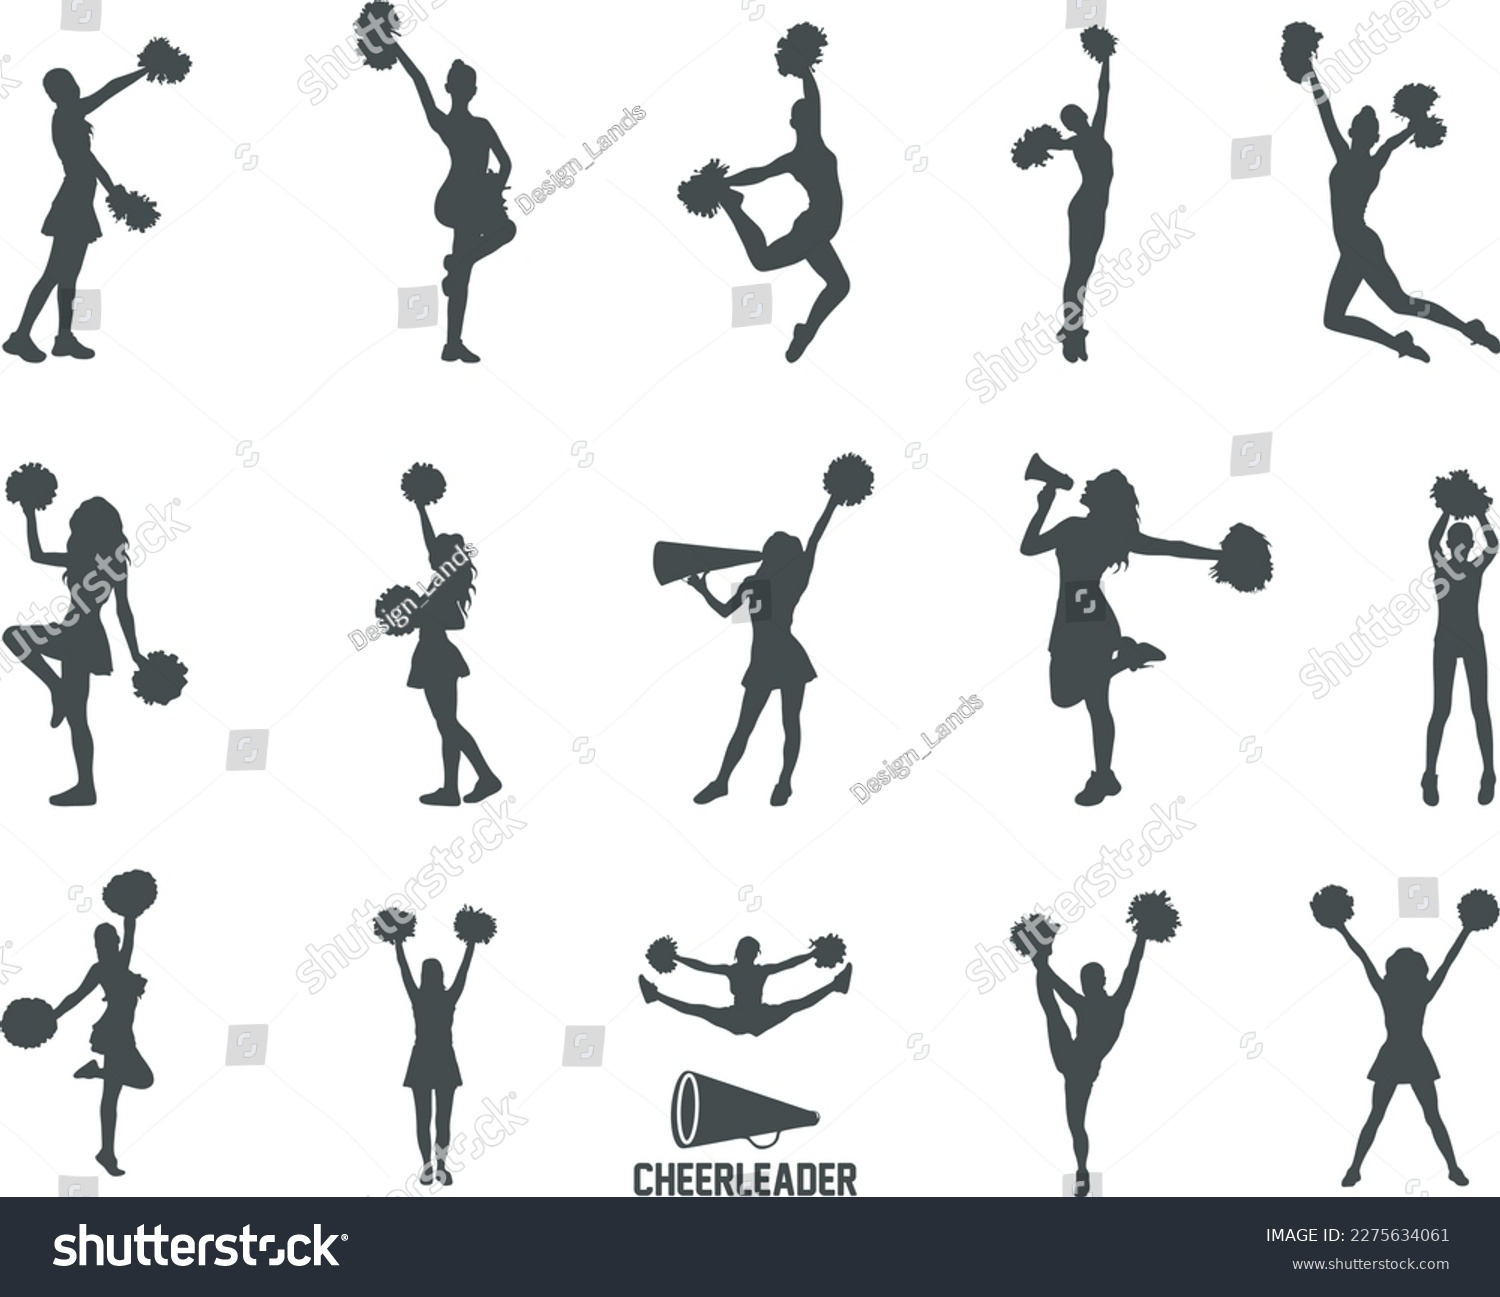 SVG of Cheerleader silhouette, Cheerleader SVG Cut Files, Cheer Svg, Cheer Girls Silhouette Bundle, Cheerleader silhouettes, Cheerleader girl vector svg